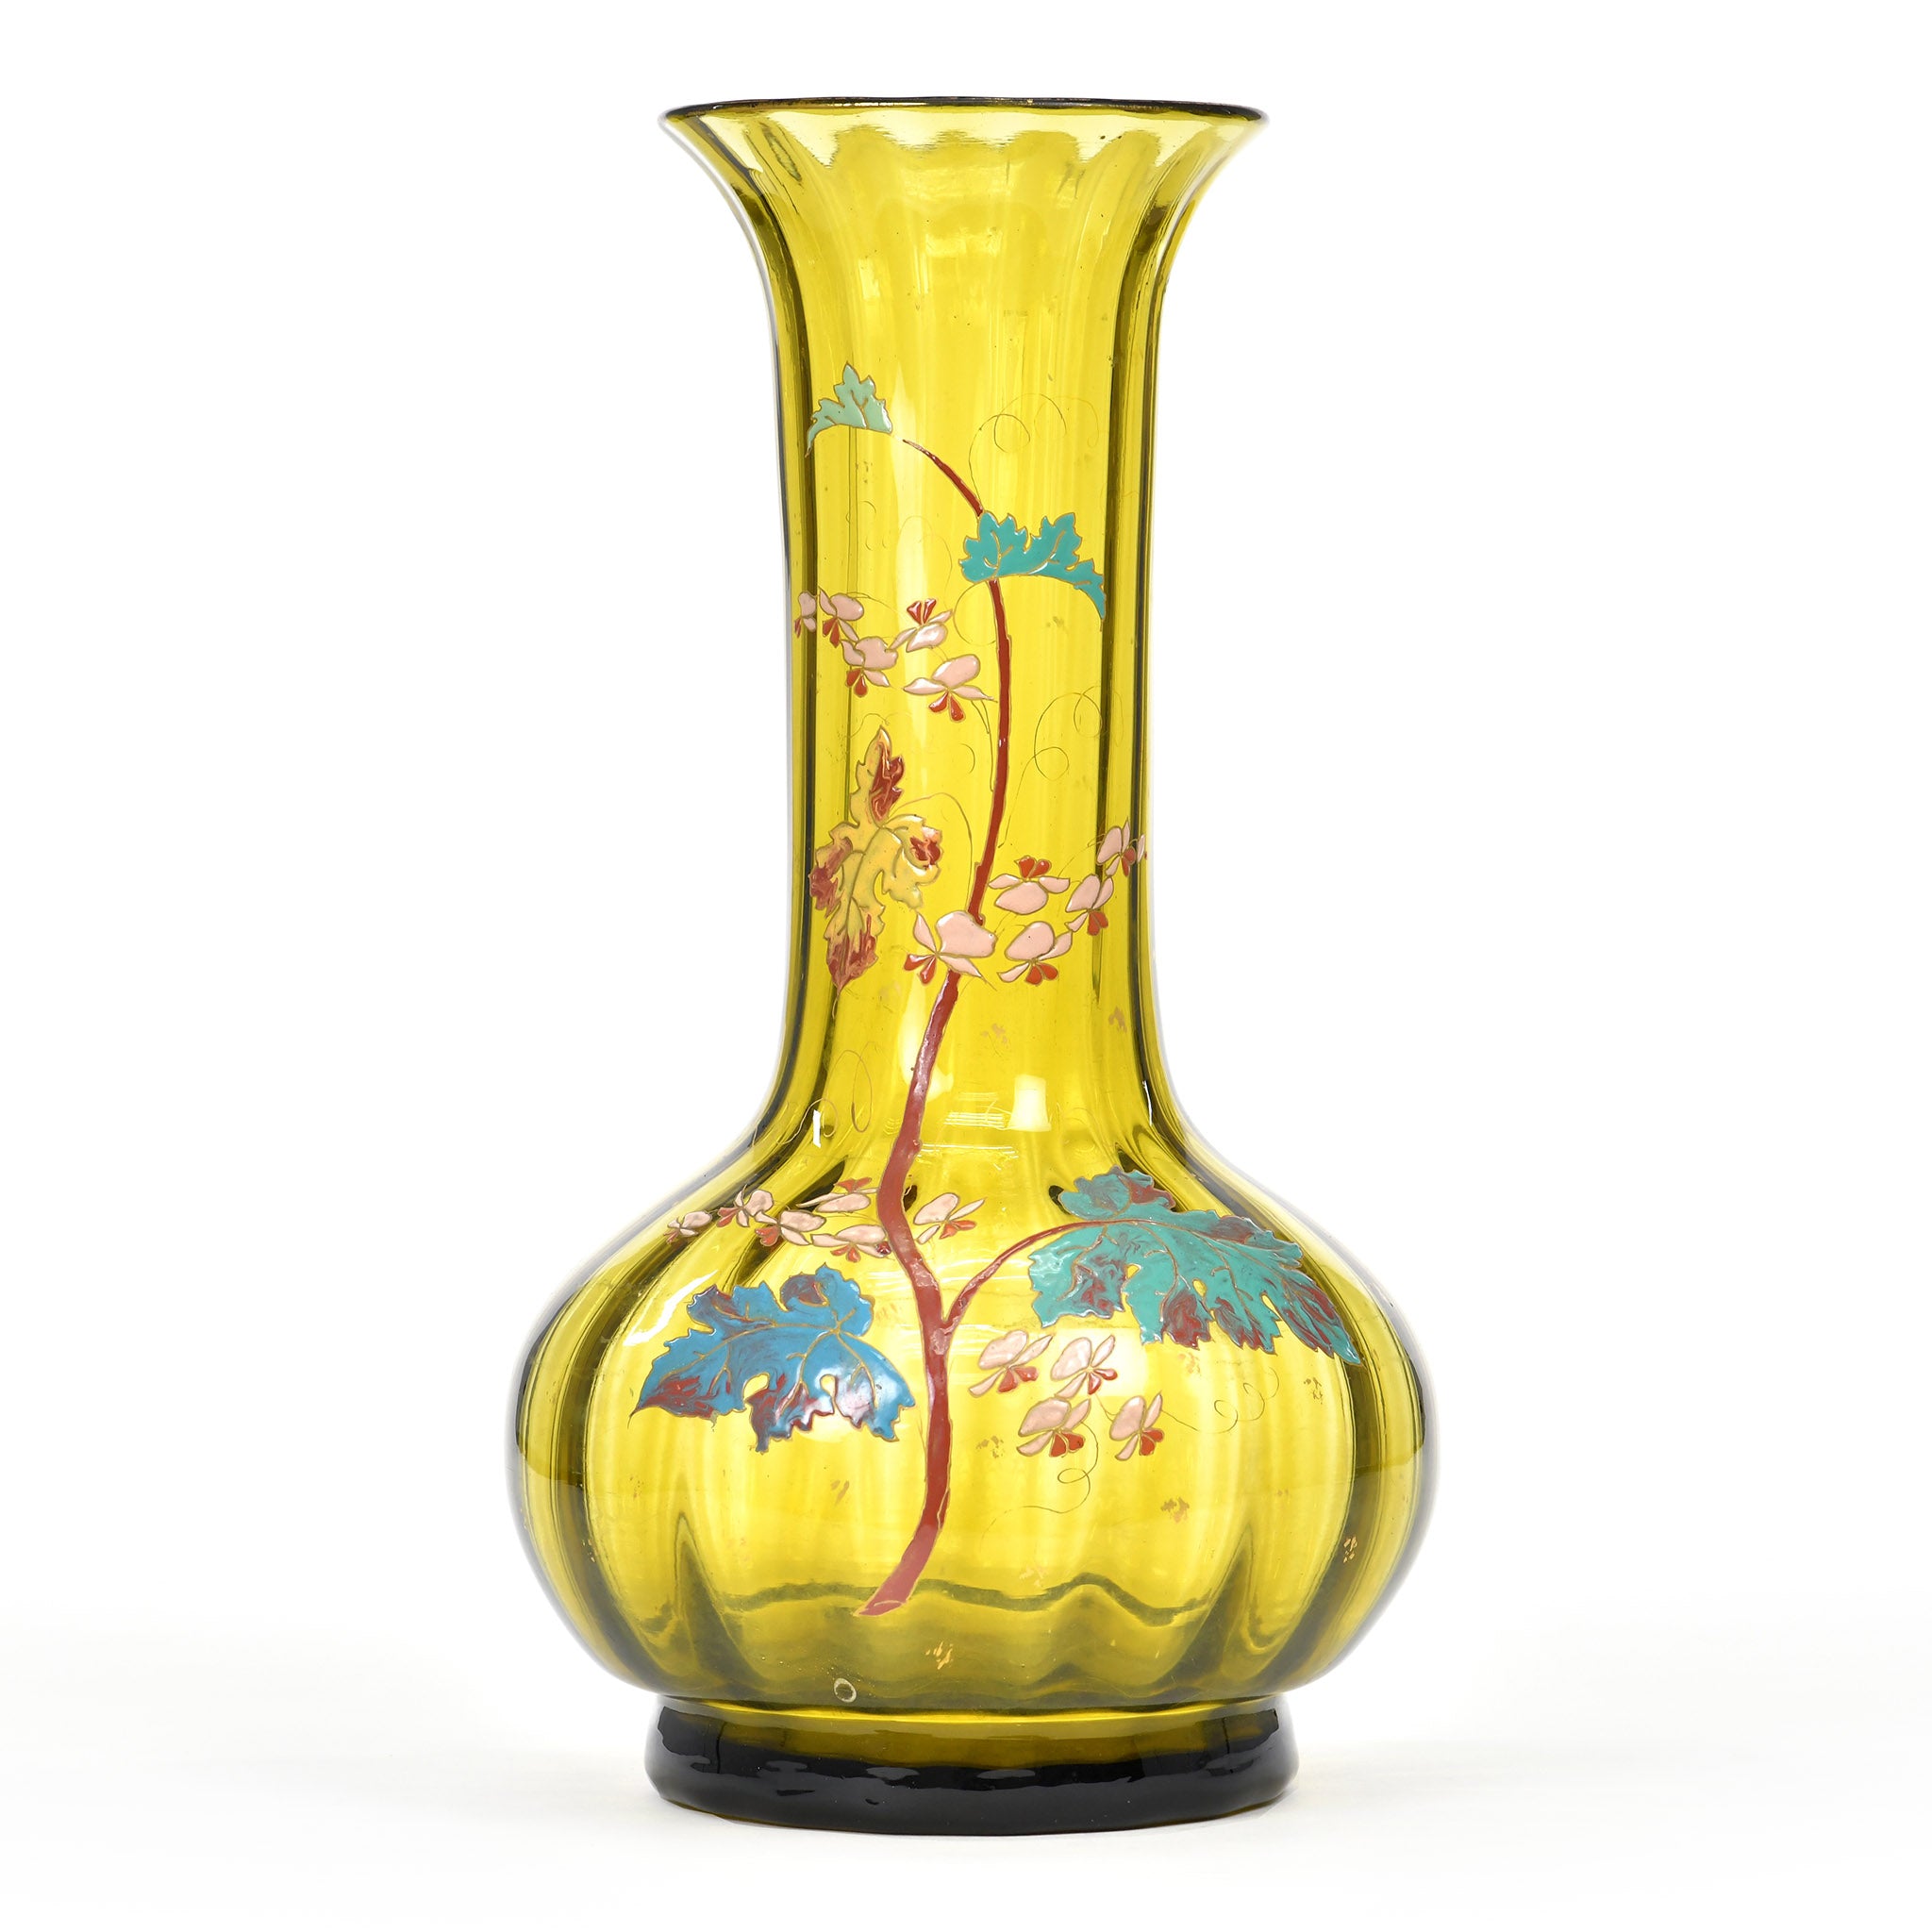 Intricately designed Galle Vase